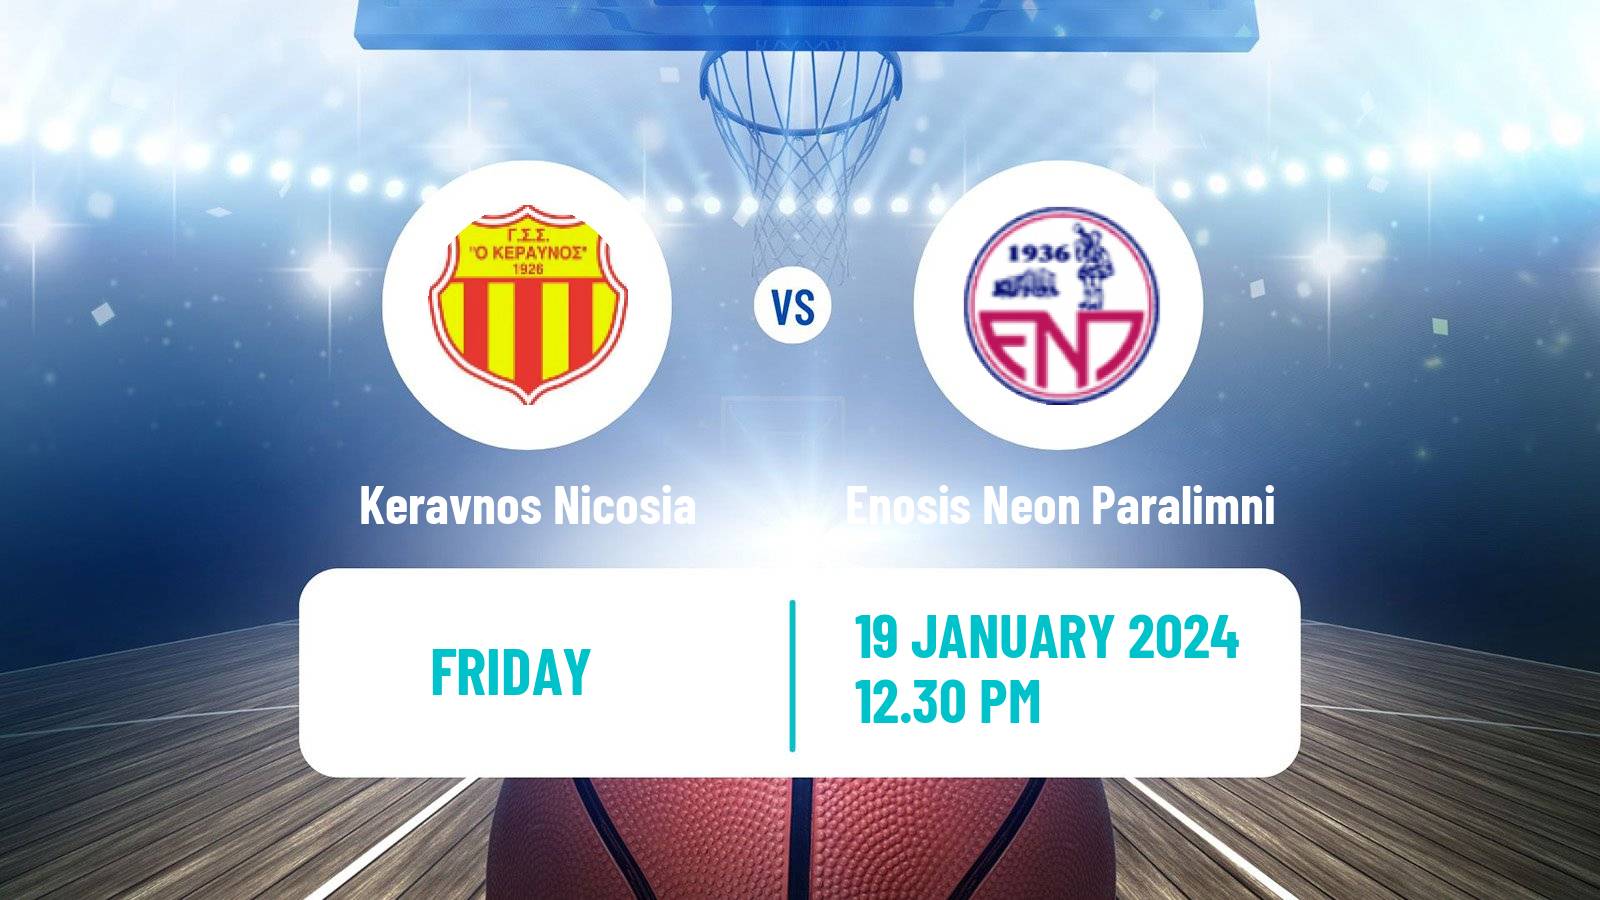 Basketball Cypriot Division A Basketball Keravnos Nicosia - Enosis Neon Paralimni